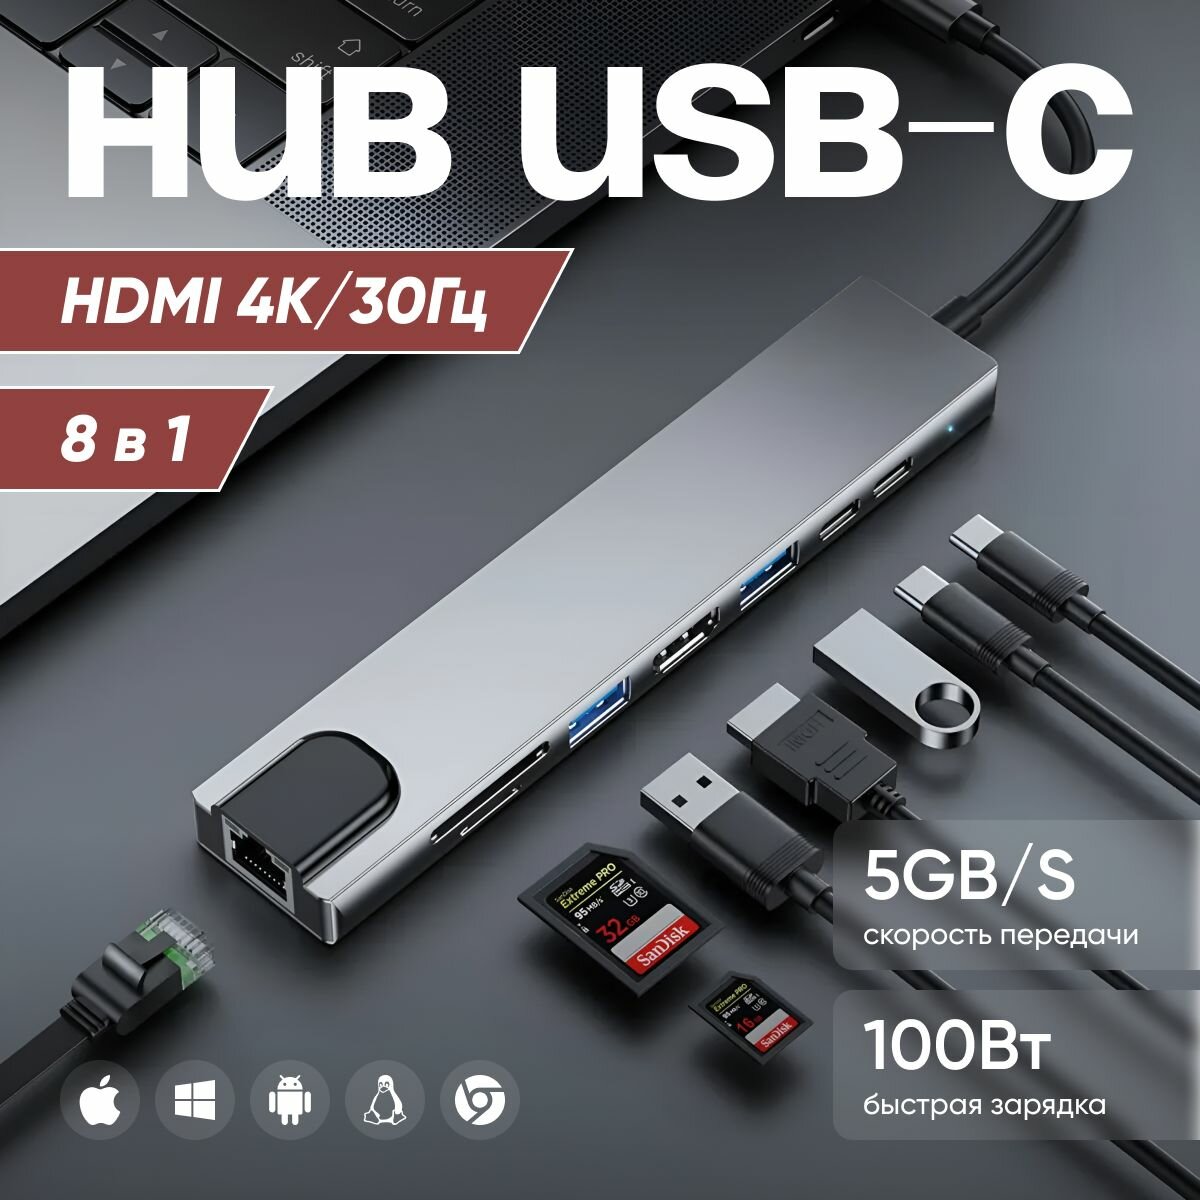 8 in 1 usb type c hub 3.0 Разветвитель с 4K HDMI PD кард-ридером RJ45 для ipad Macbook xiaomi ноутбука